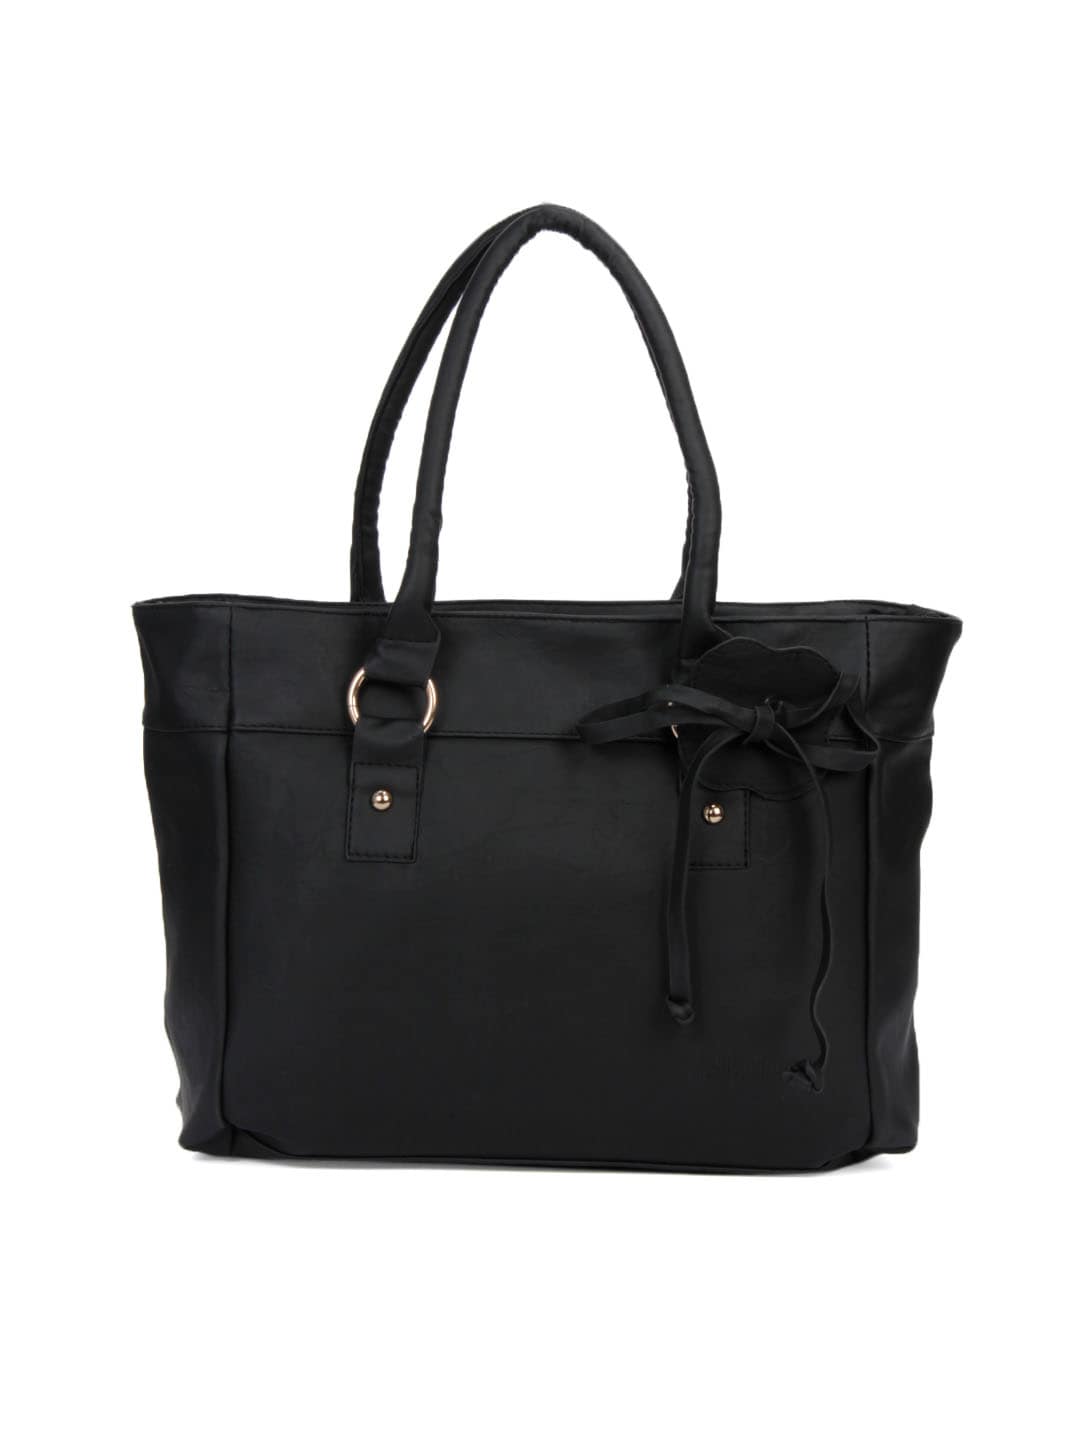 Lino Perros Women Leatherette Black Handbag